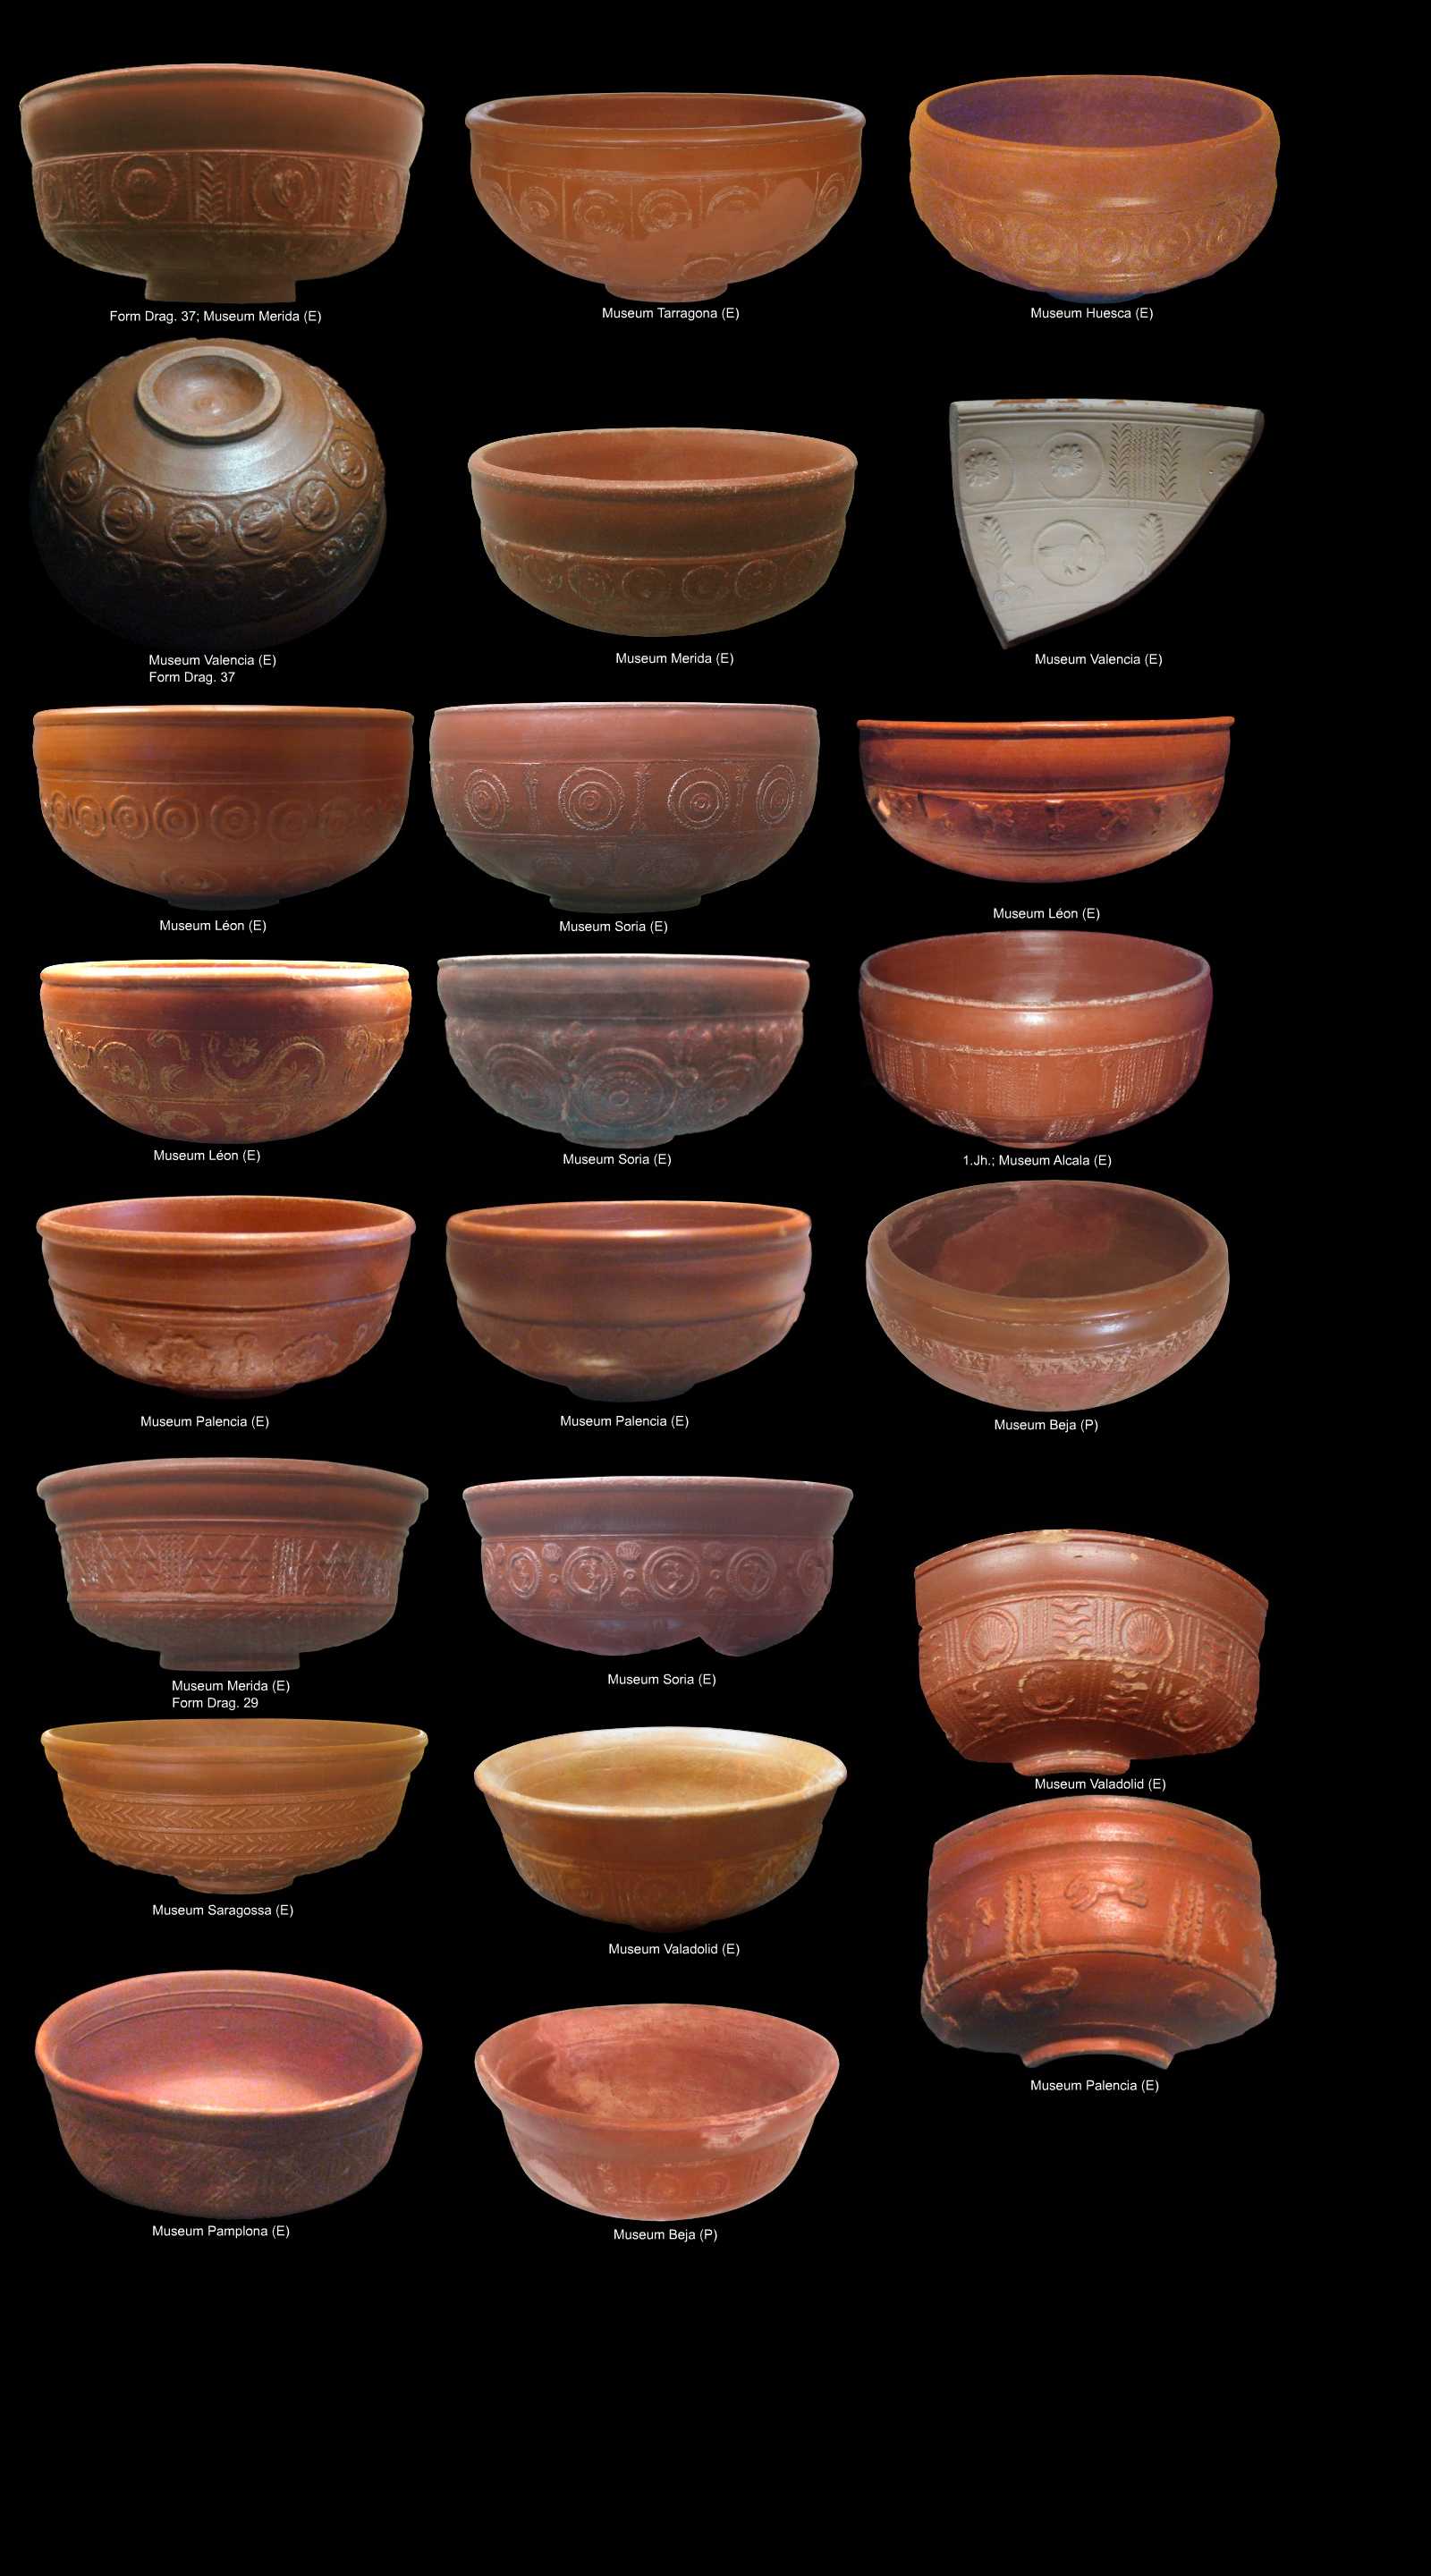 keramikformgetoepfertspanien1